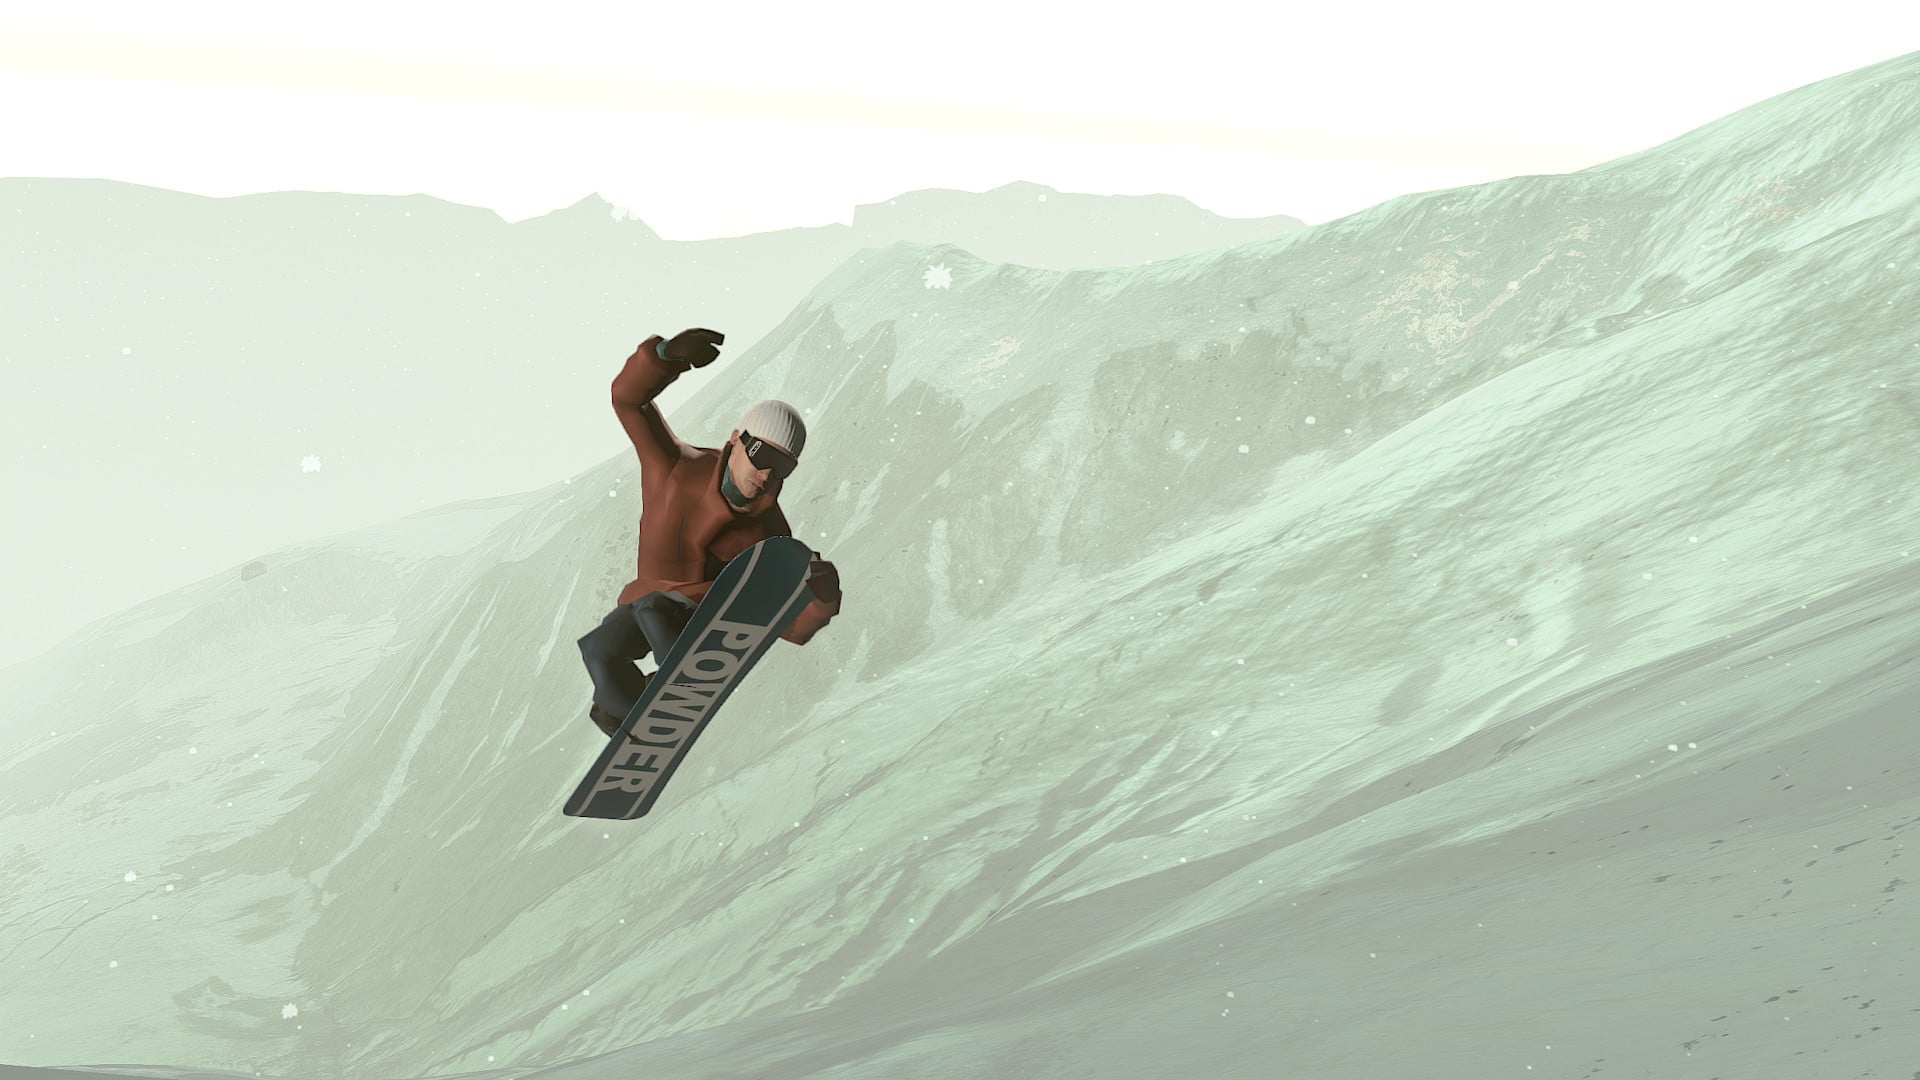 powder vr screenshot snowboarding